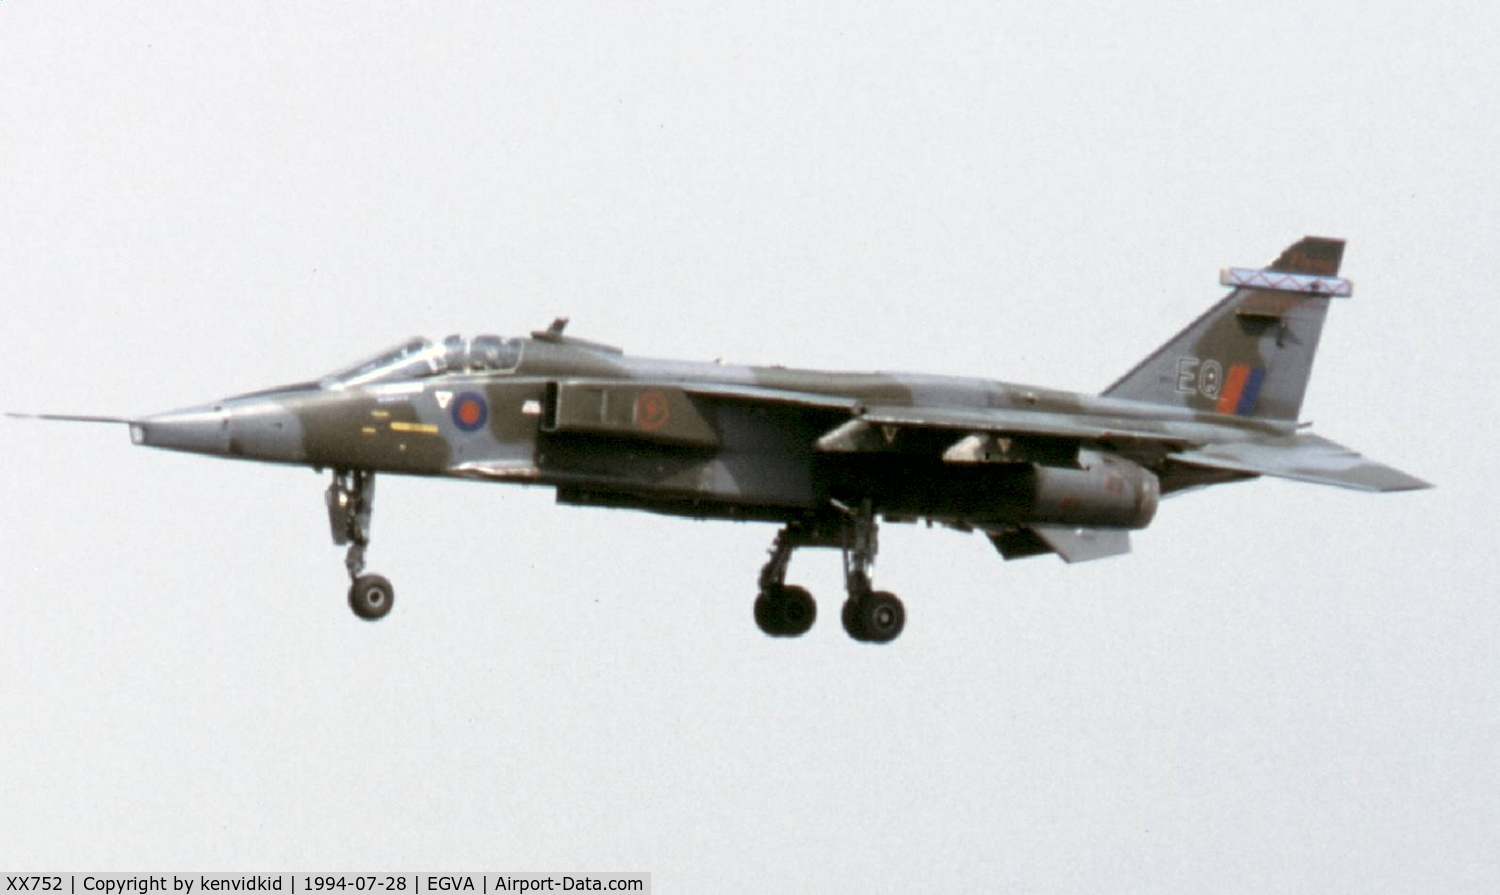 XX752, 1975 Sepecat Jaguar GR.1A C/N S.49, Royal Air Force arriving at RIAT.